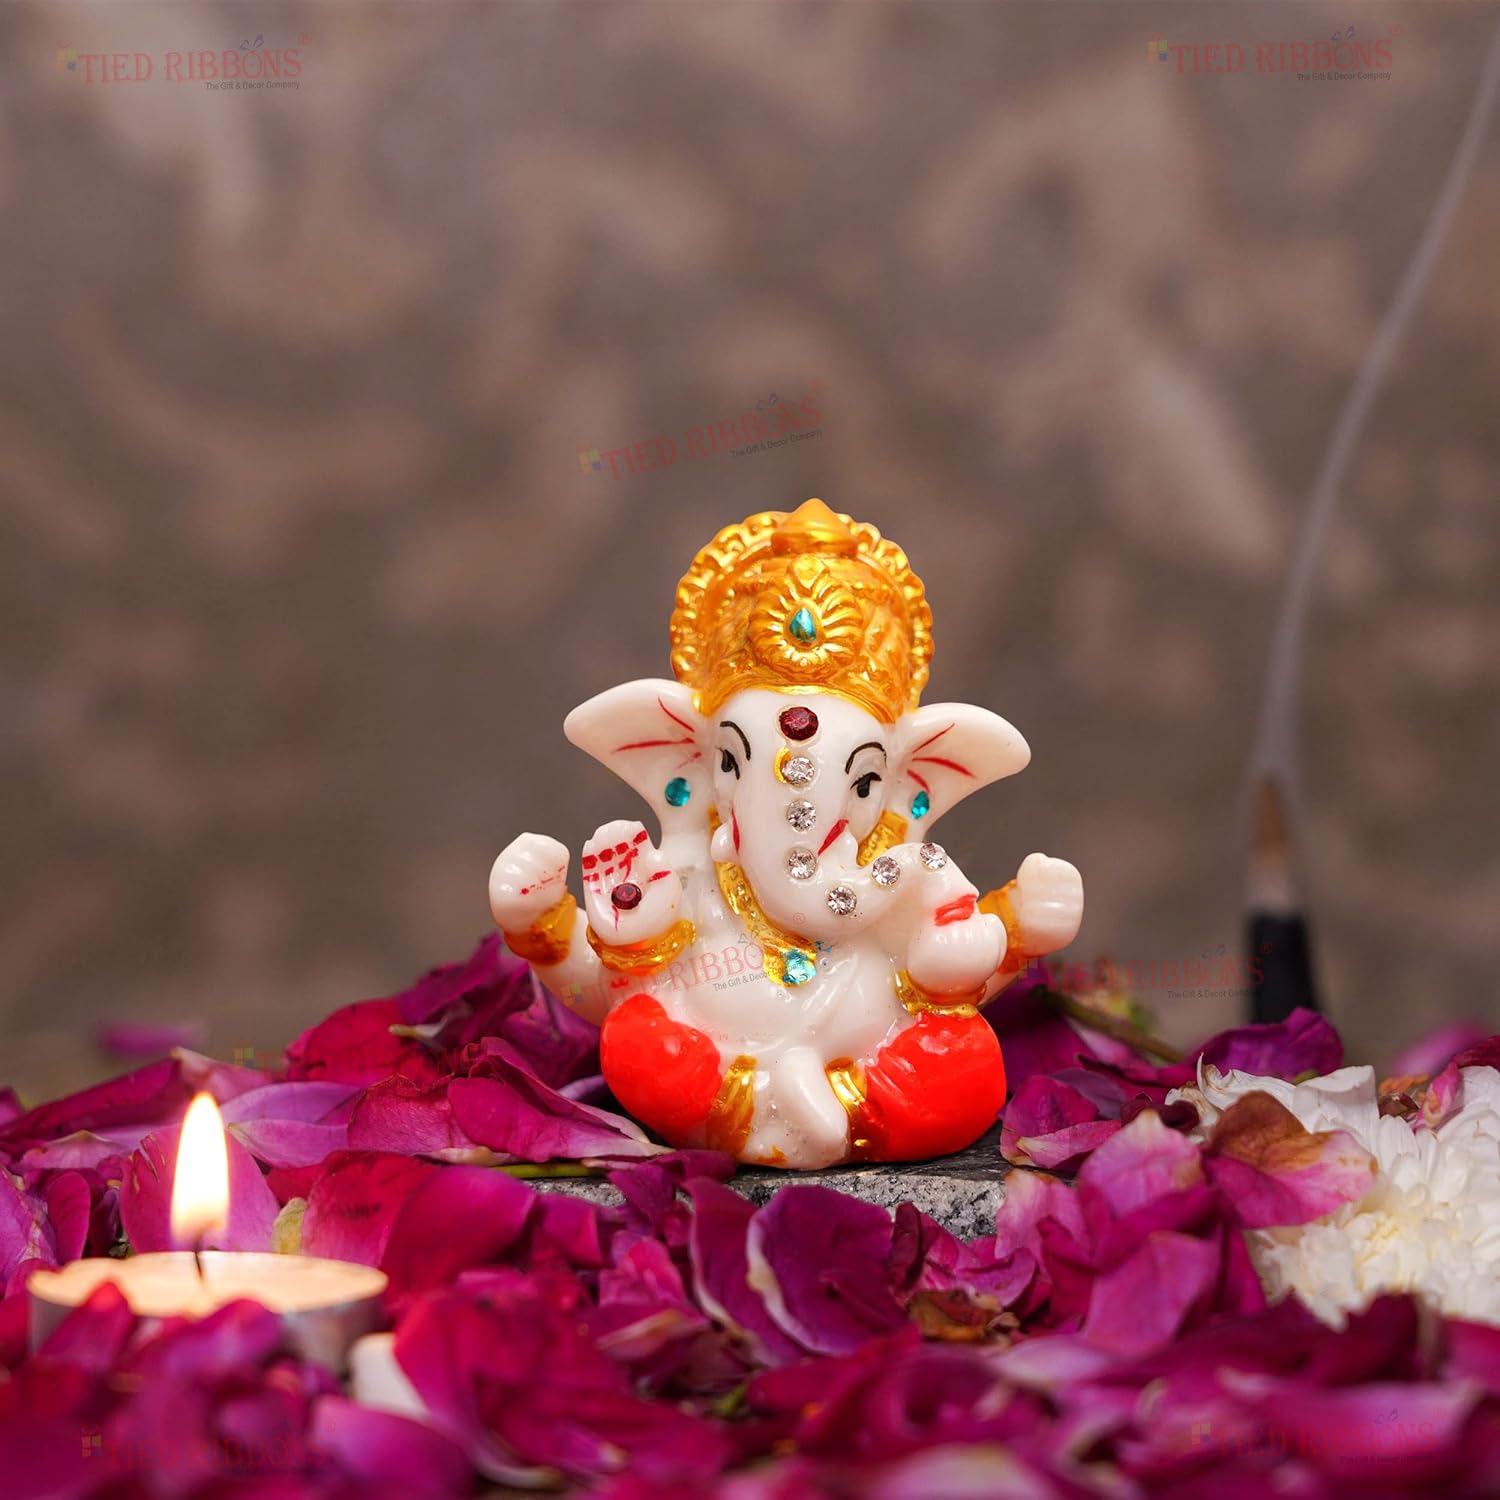 TIED RIBBONS Ganesh Idol | Ganesh Statue Sculpture for Car Dashboard, Home, Temple Décor | Indian God | 2 X 2.3 Inch | Resin | Ganesha Idol Figurine - Diwali Decorations for Home